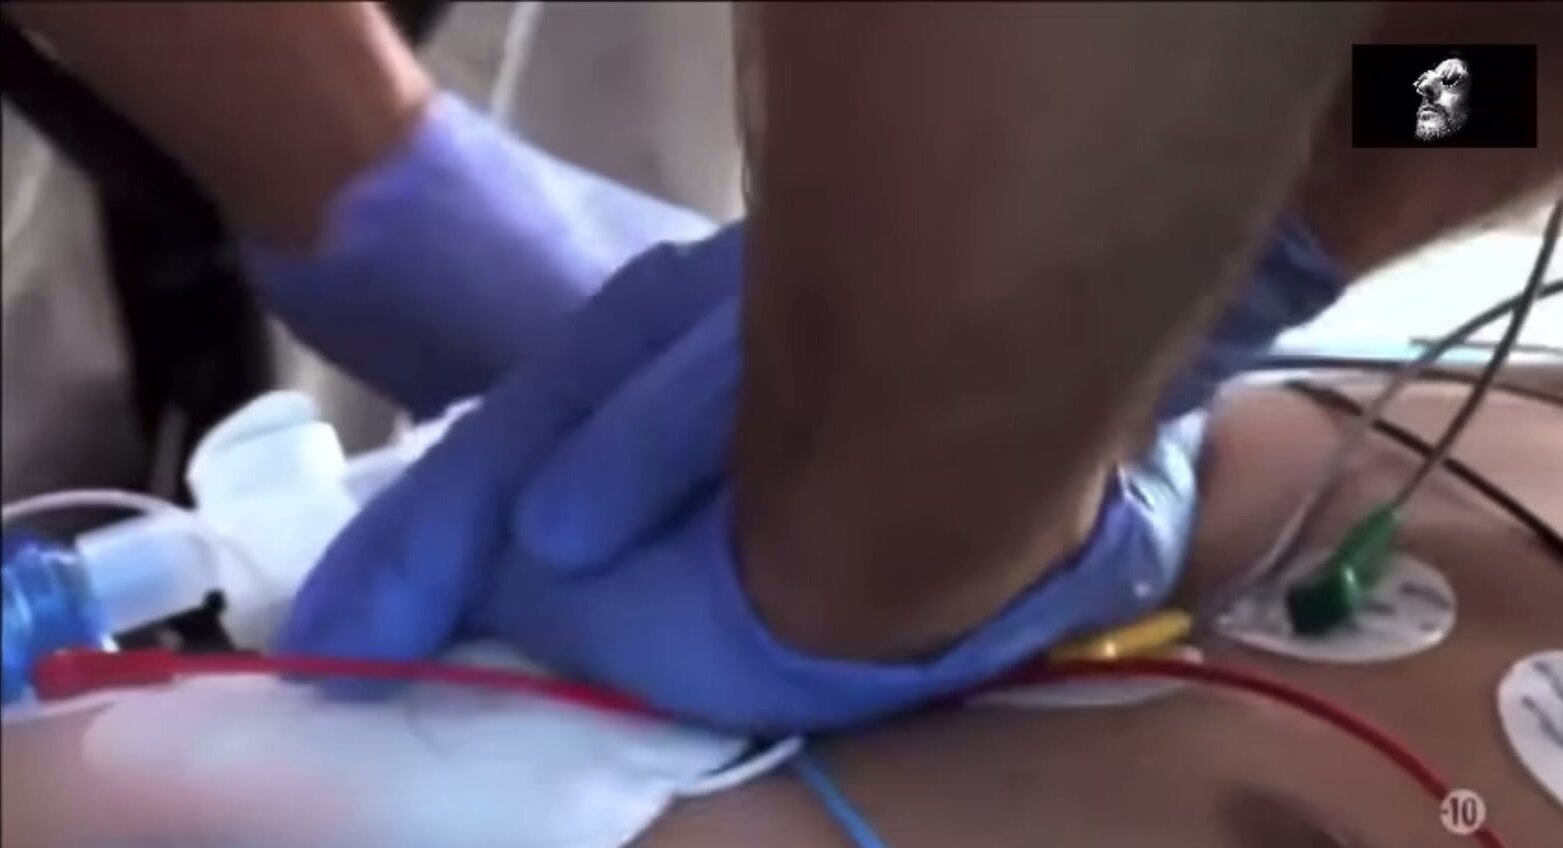 Resuscitation on man in cardiac arrest